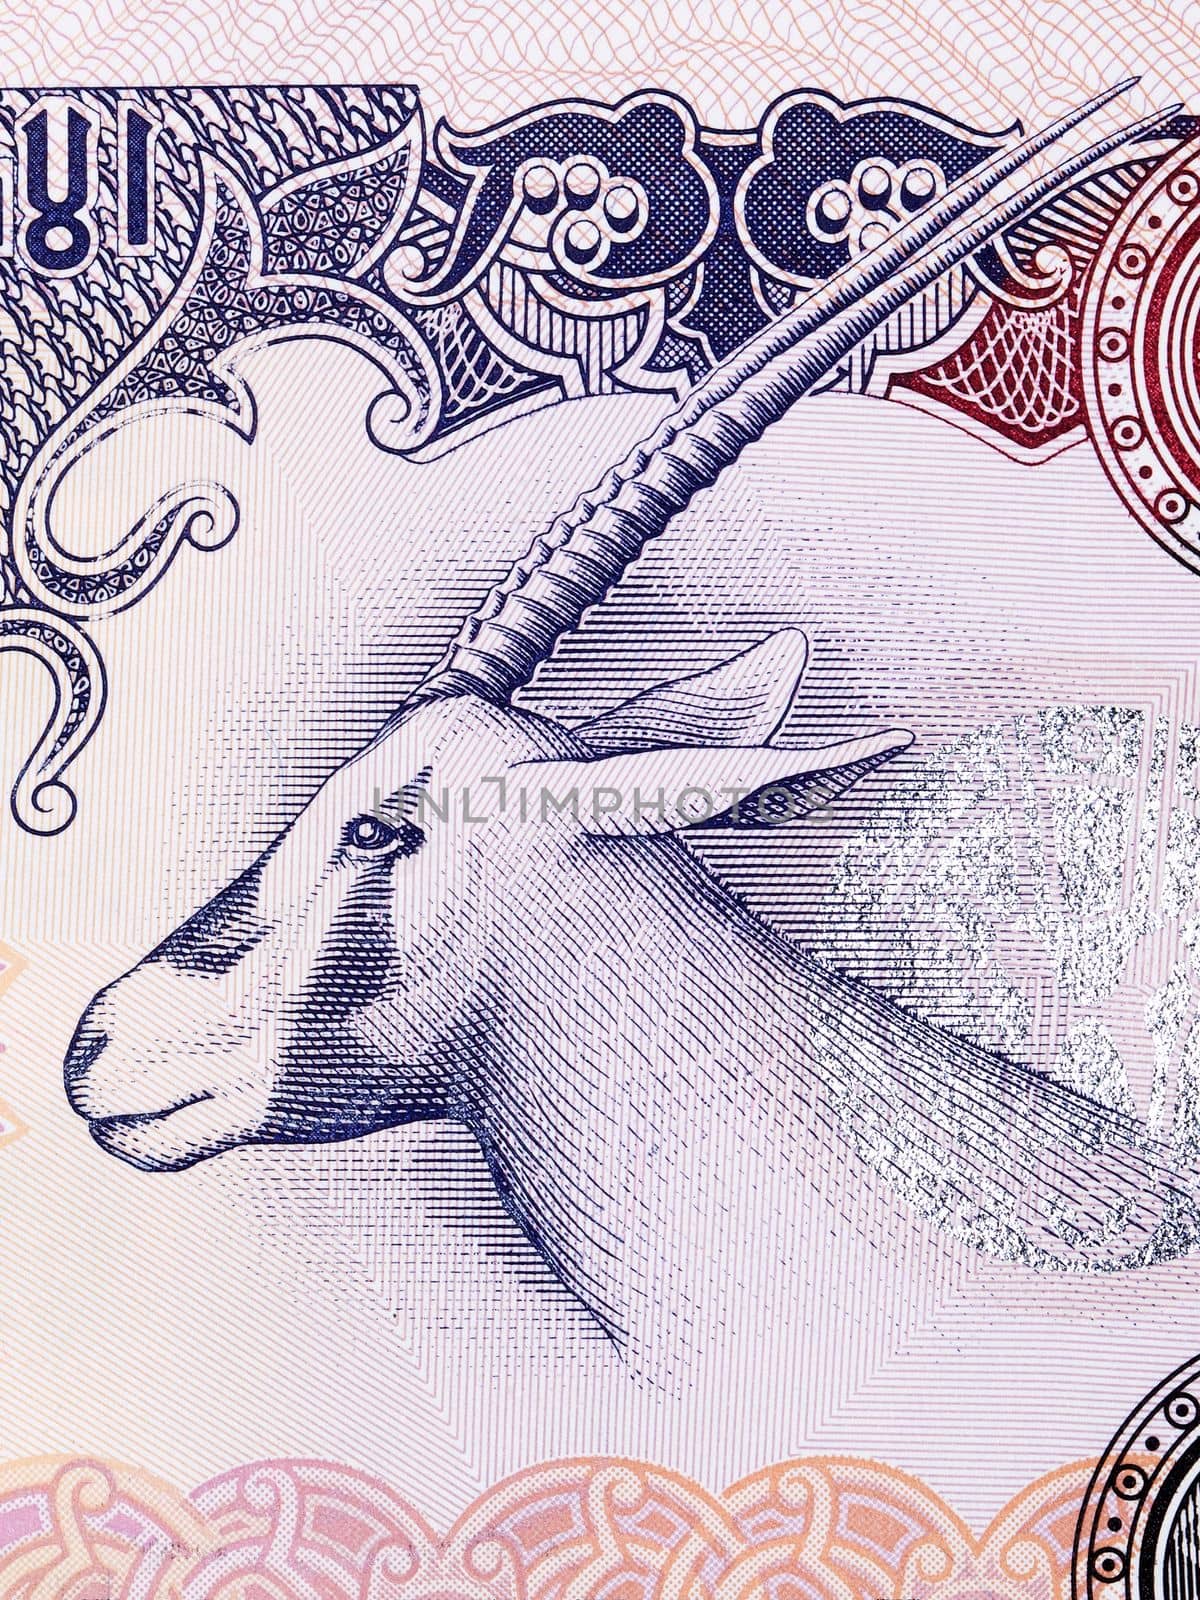 Oryx antelope from United Arab Emirates money	 by johan10